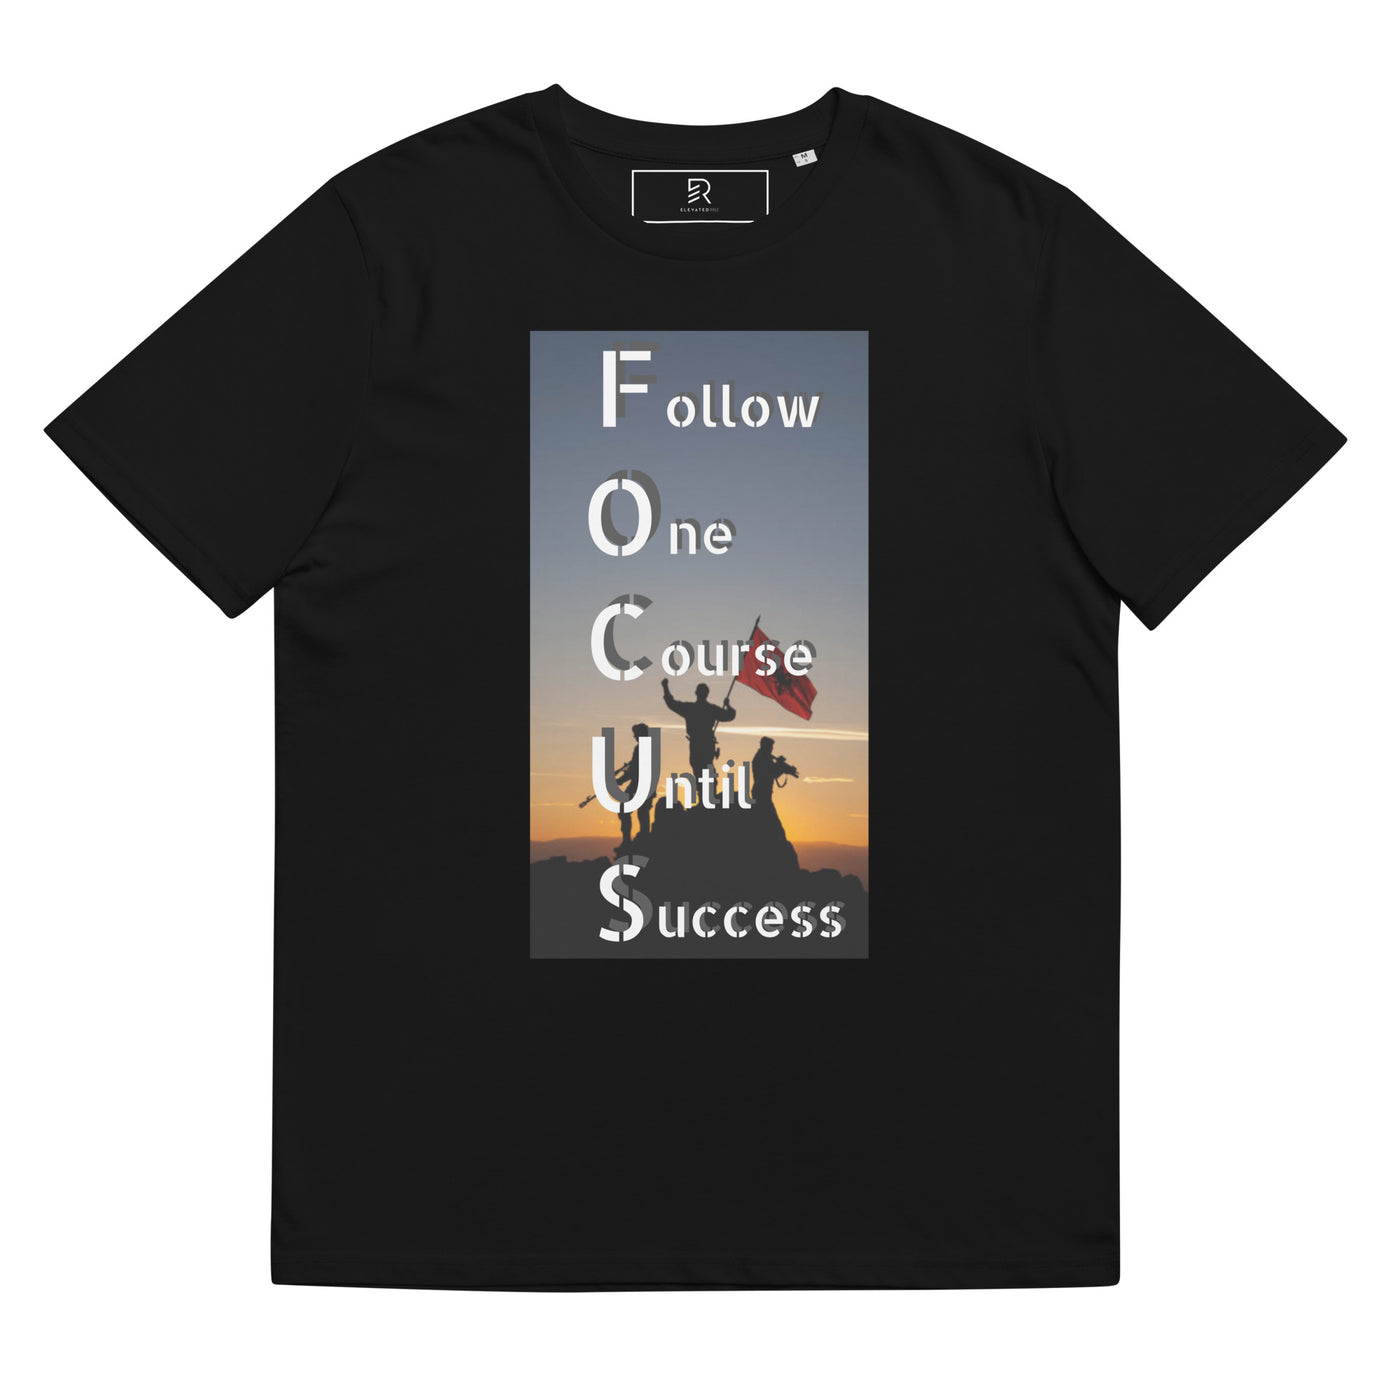 Women's Organic Black Cotton T-Shirt - Focus Success